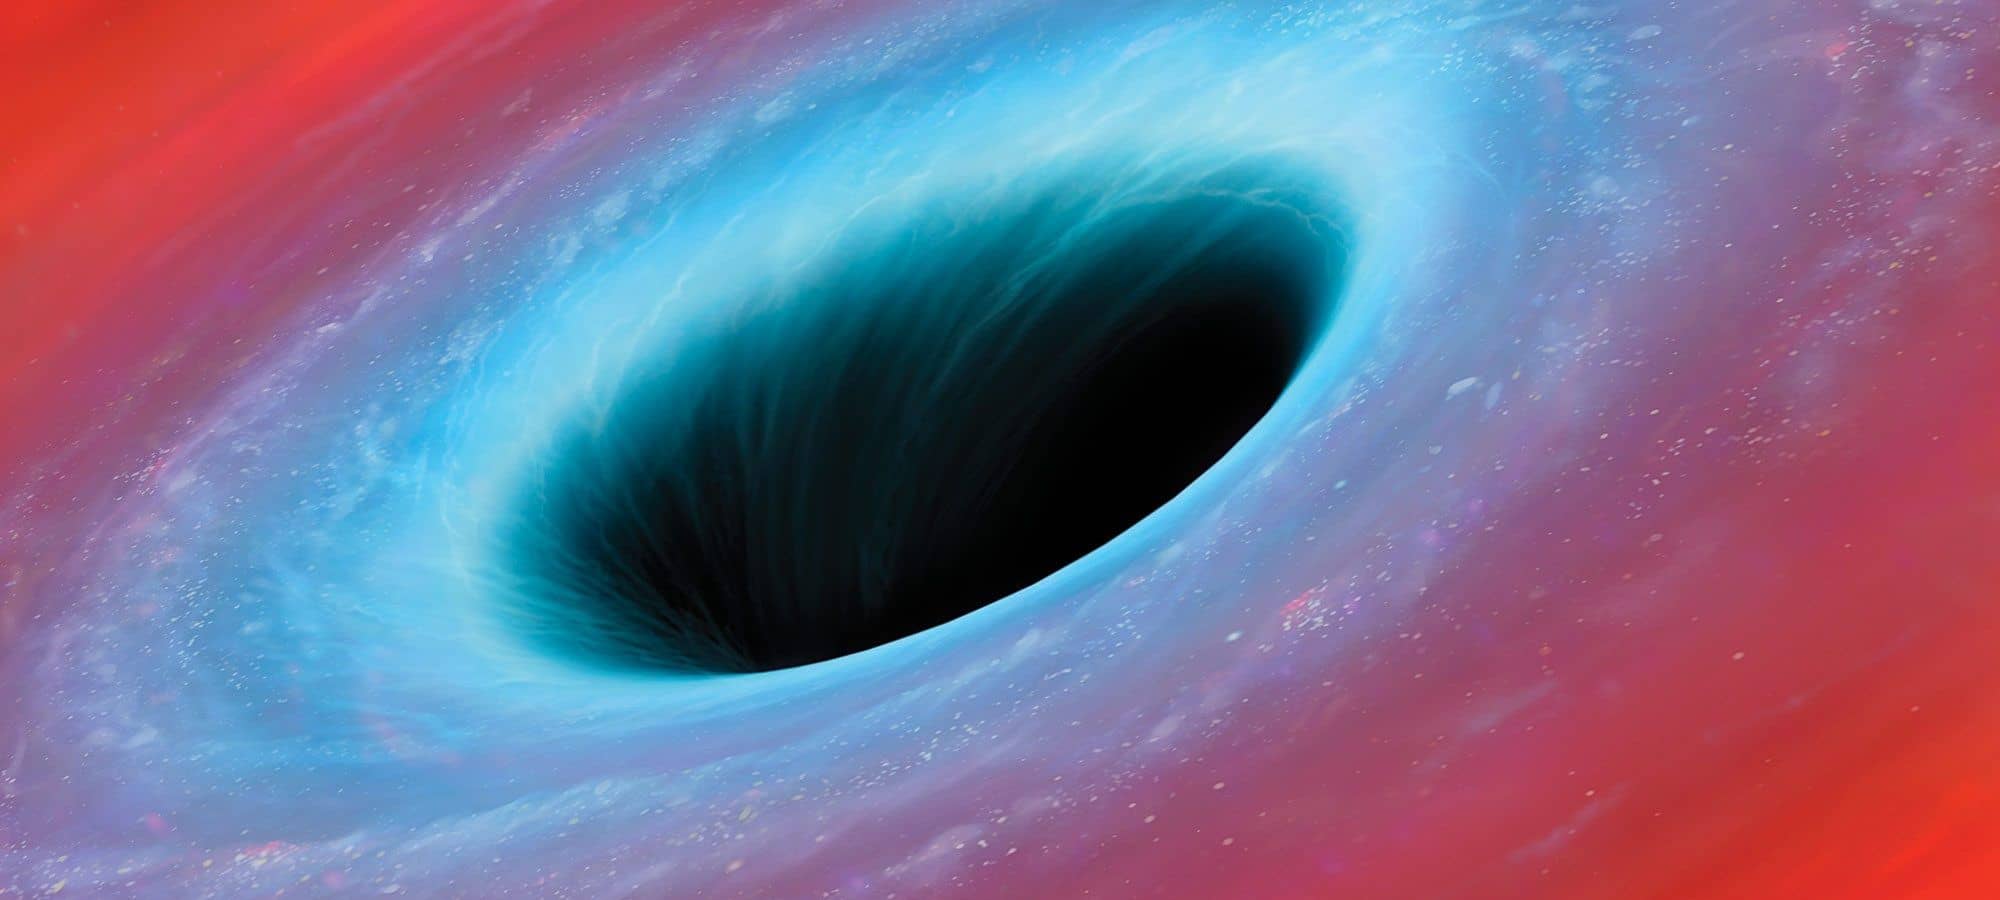 Colour image of a black hole